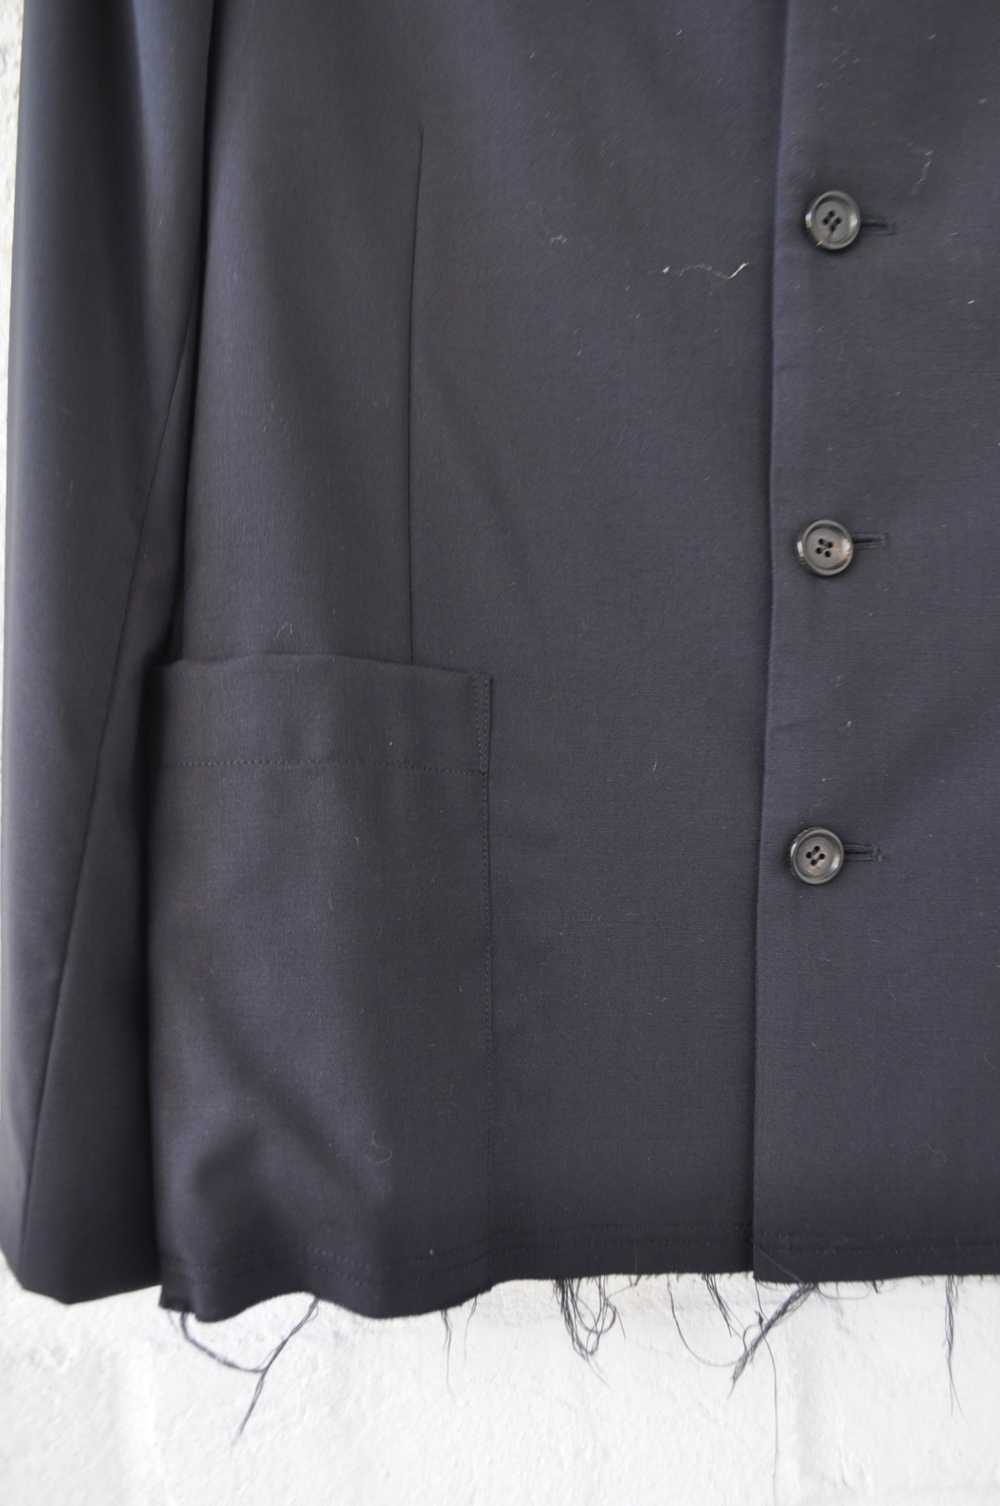 Comme des Garçons apron dress and jacket from 89 - image 2